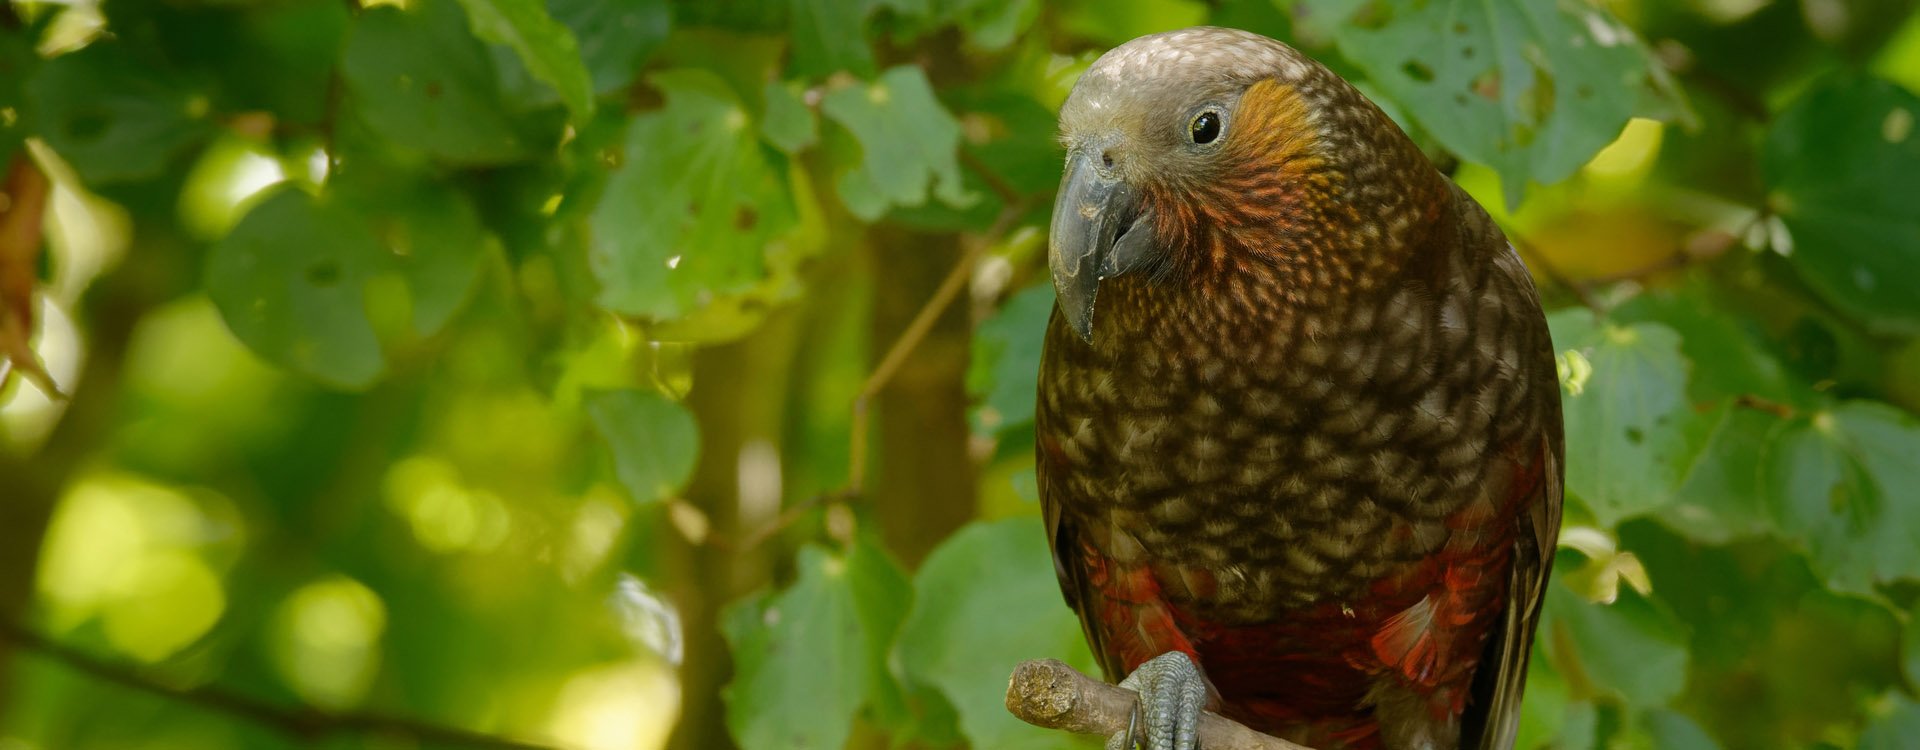 Kaka - Nestor meridionalis - endemic parakeet living in forests of New Zealand